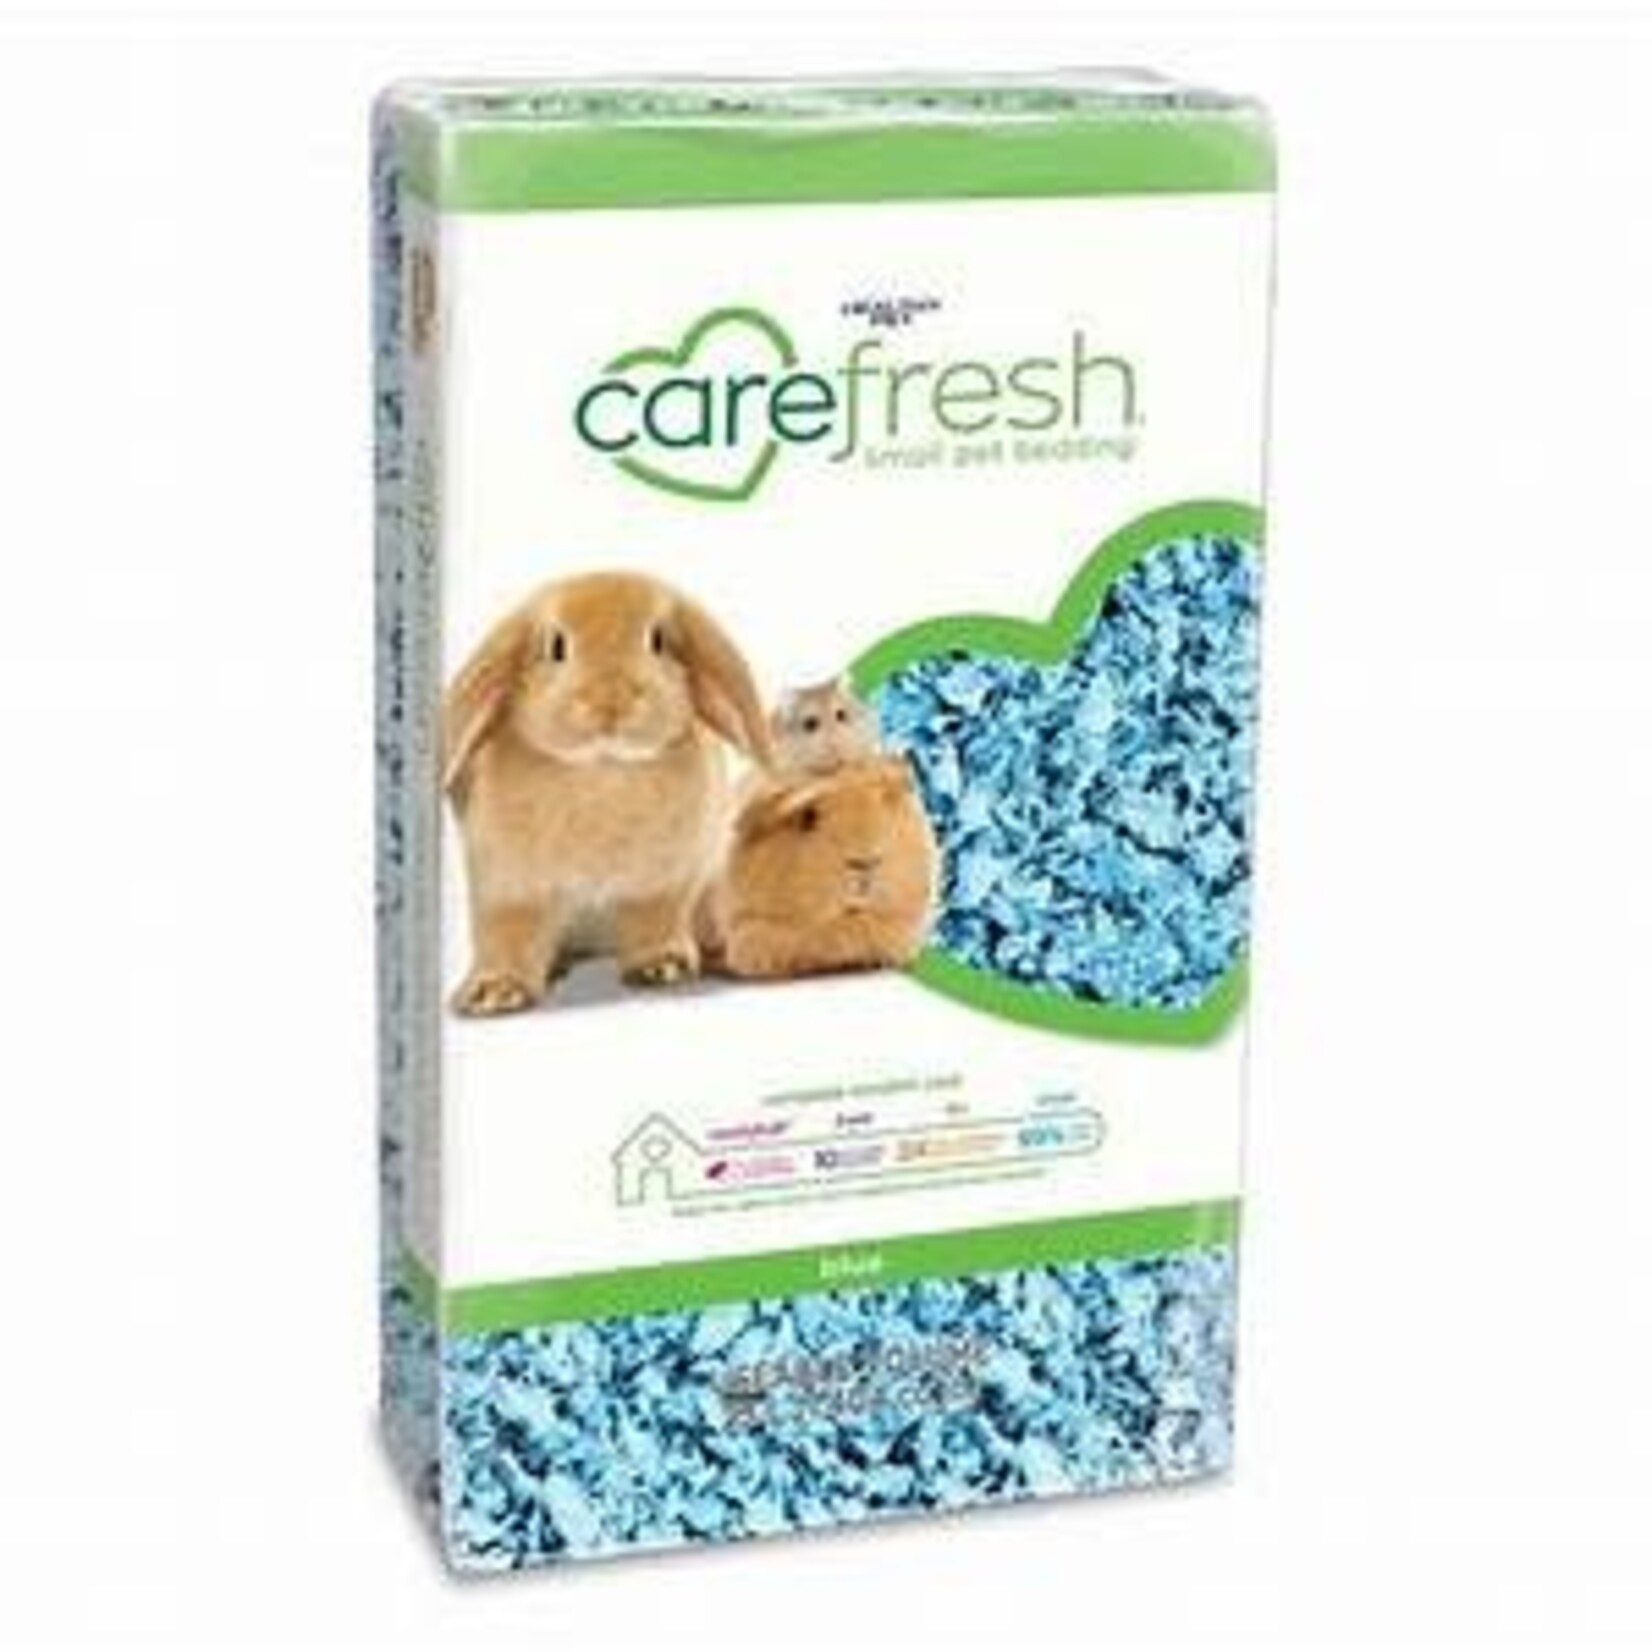 Carefresh Care Fresh Pet Bedding Blue 23L